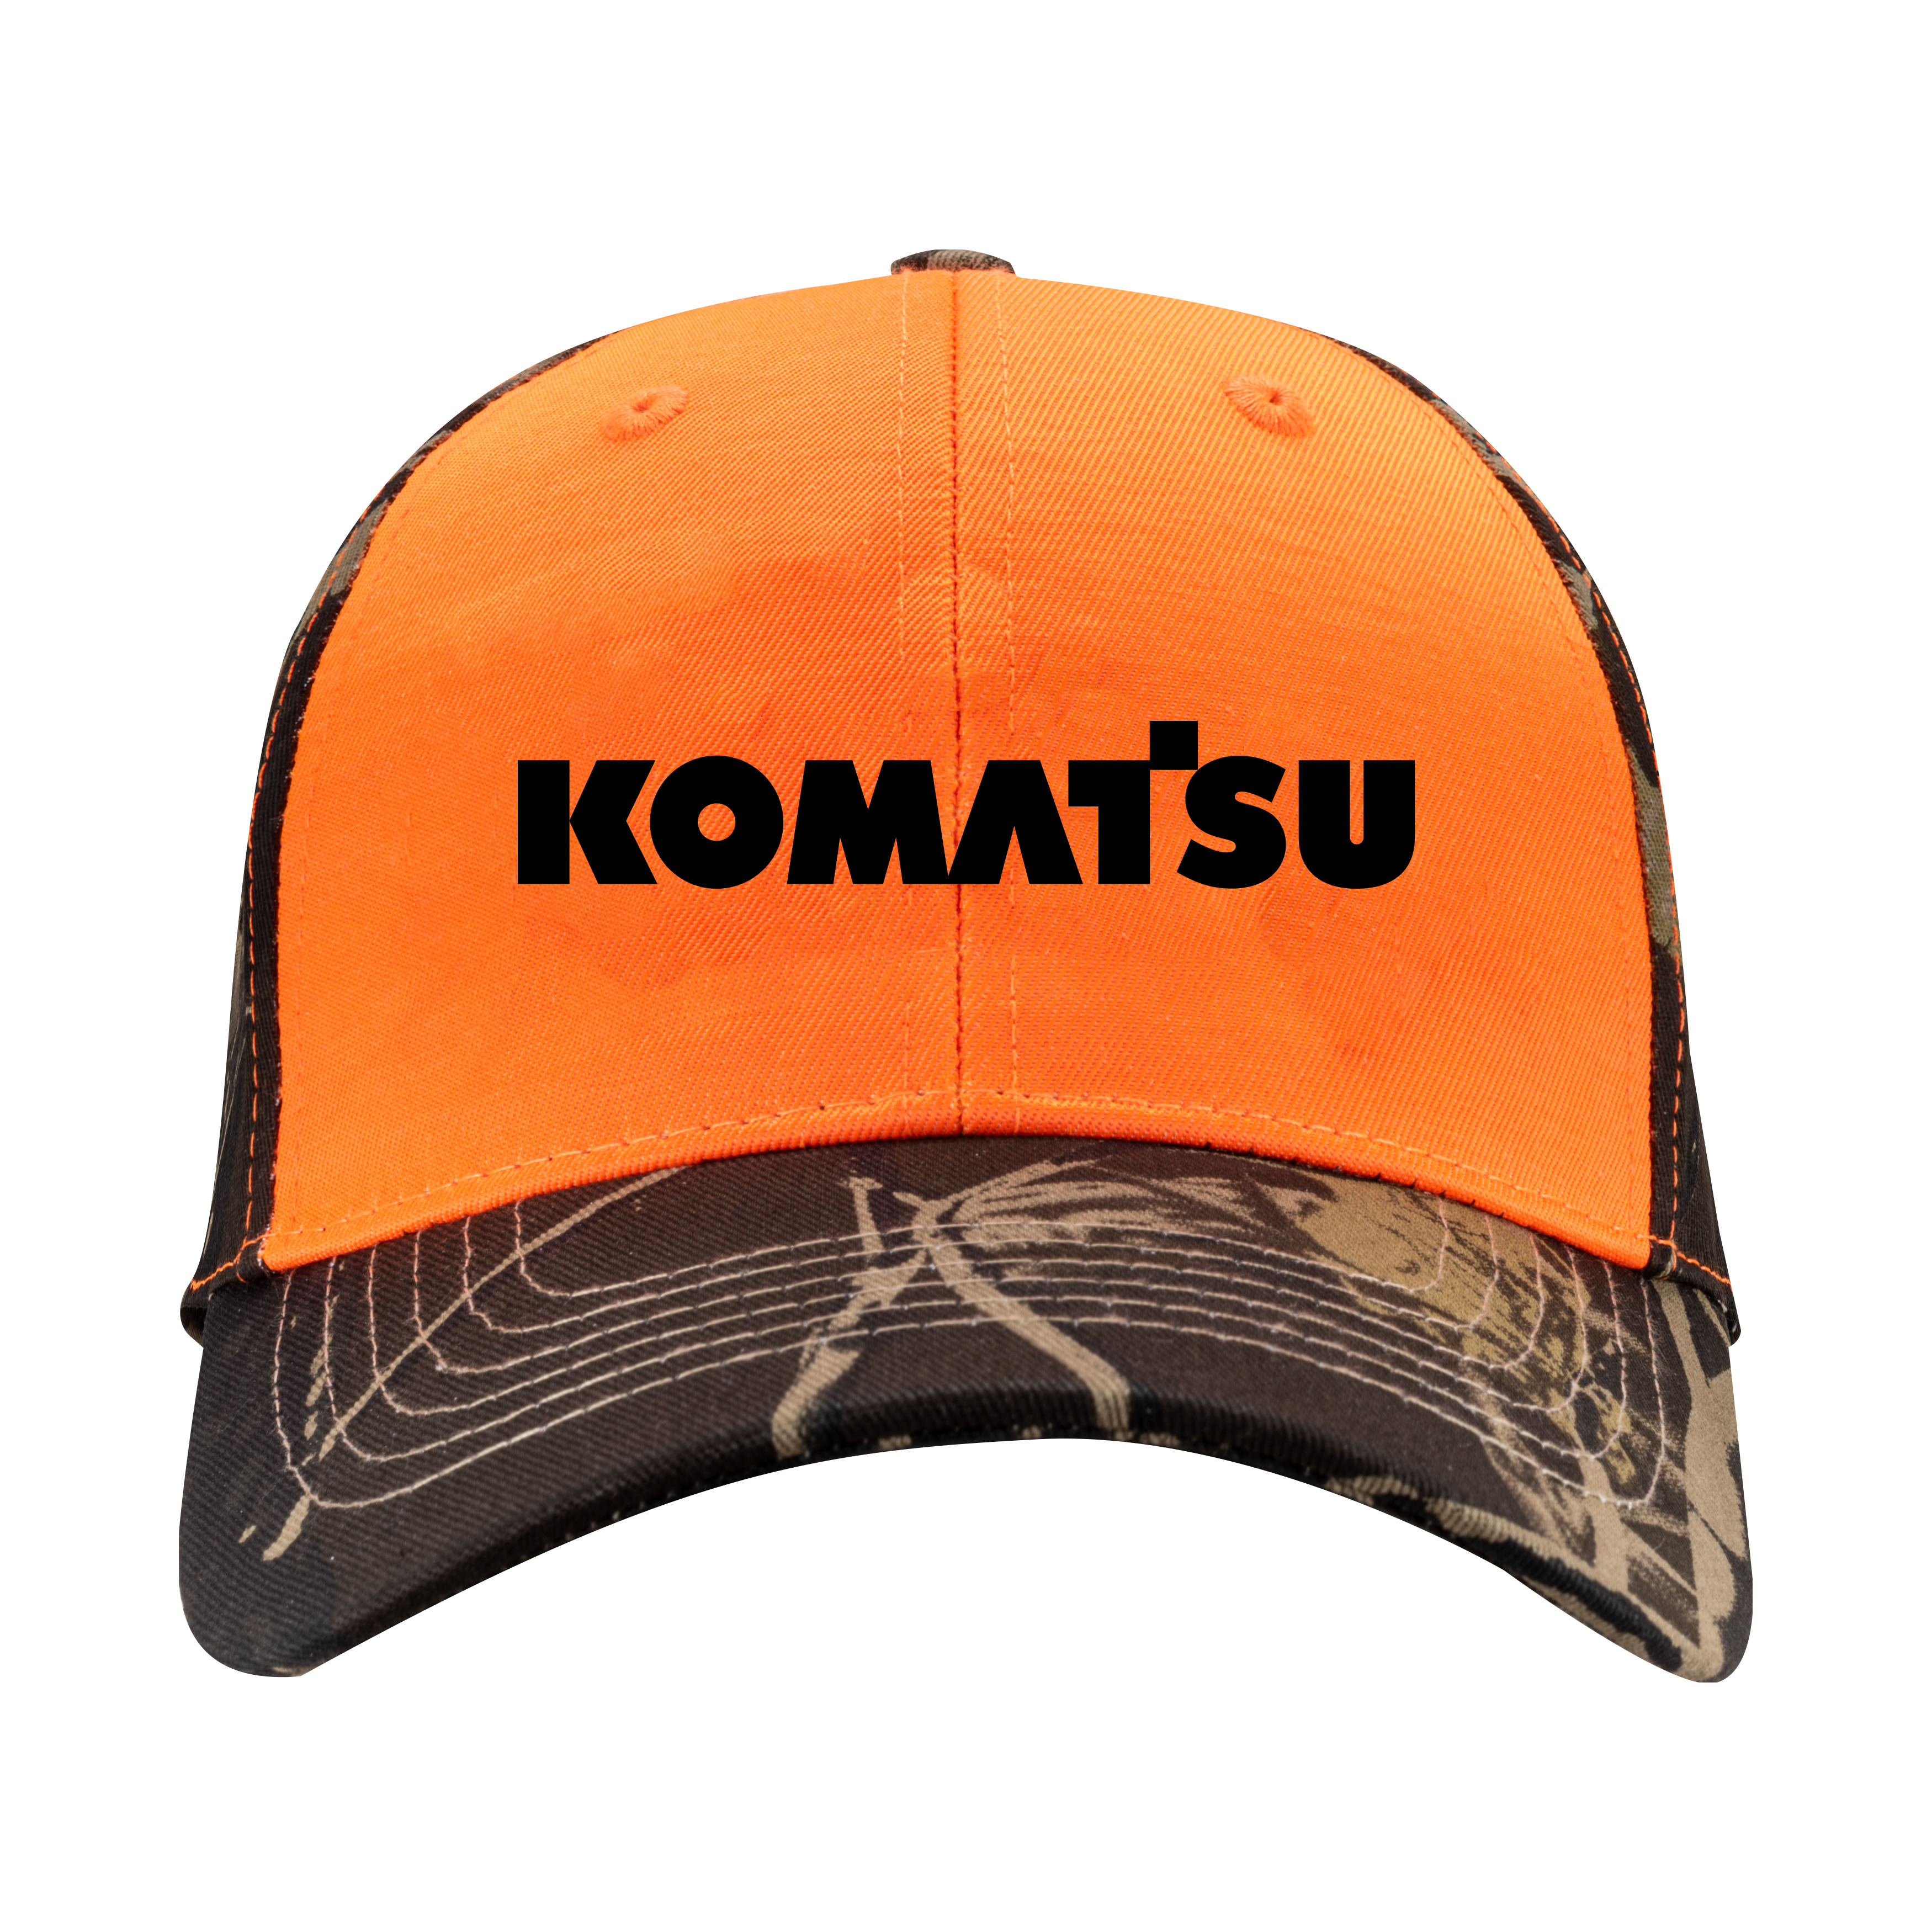 HUNTING BASEBALL CAP - Komatsu Forest Web shop